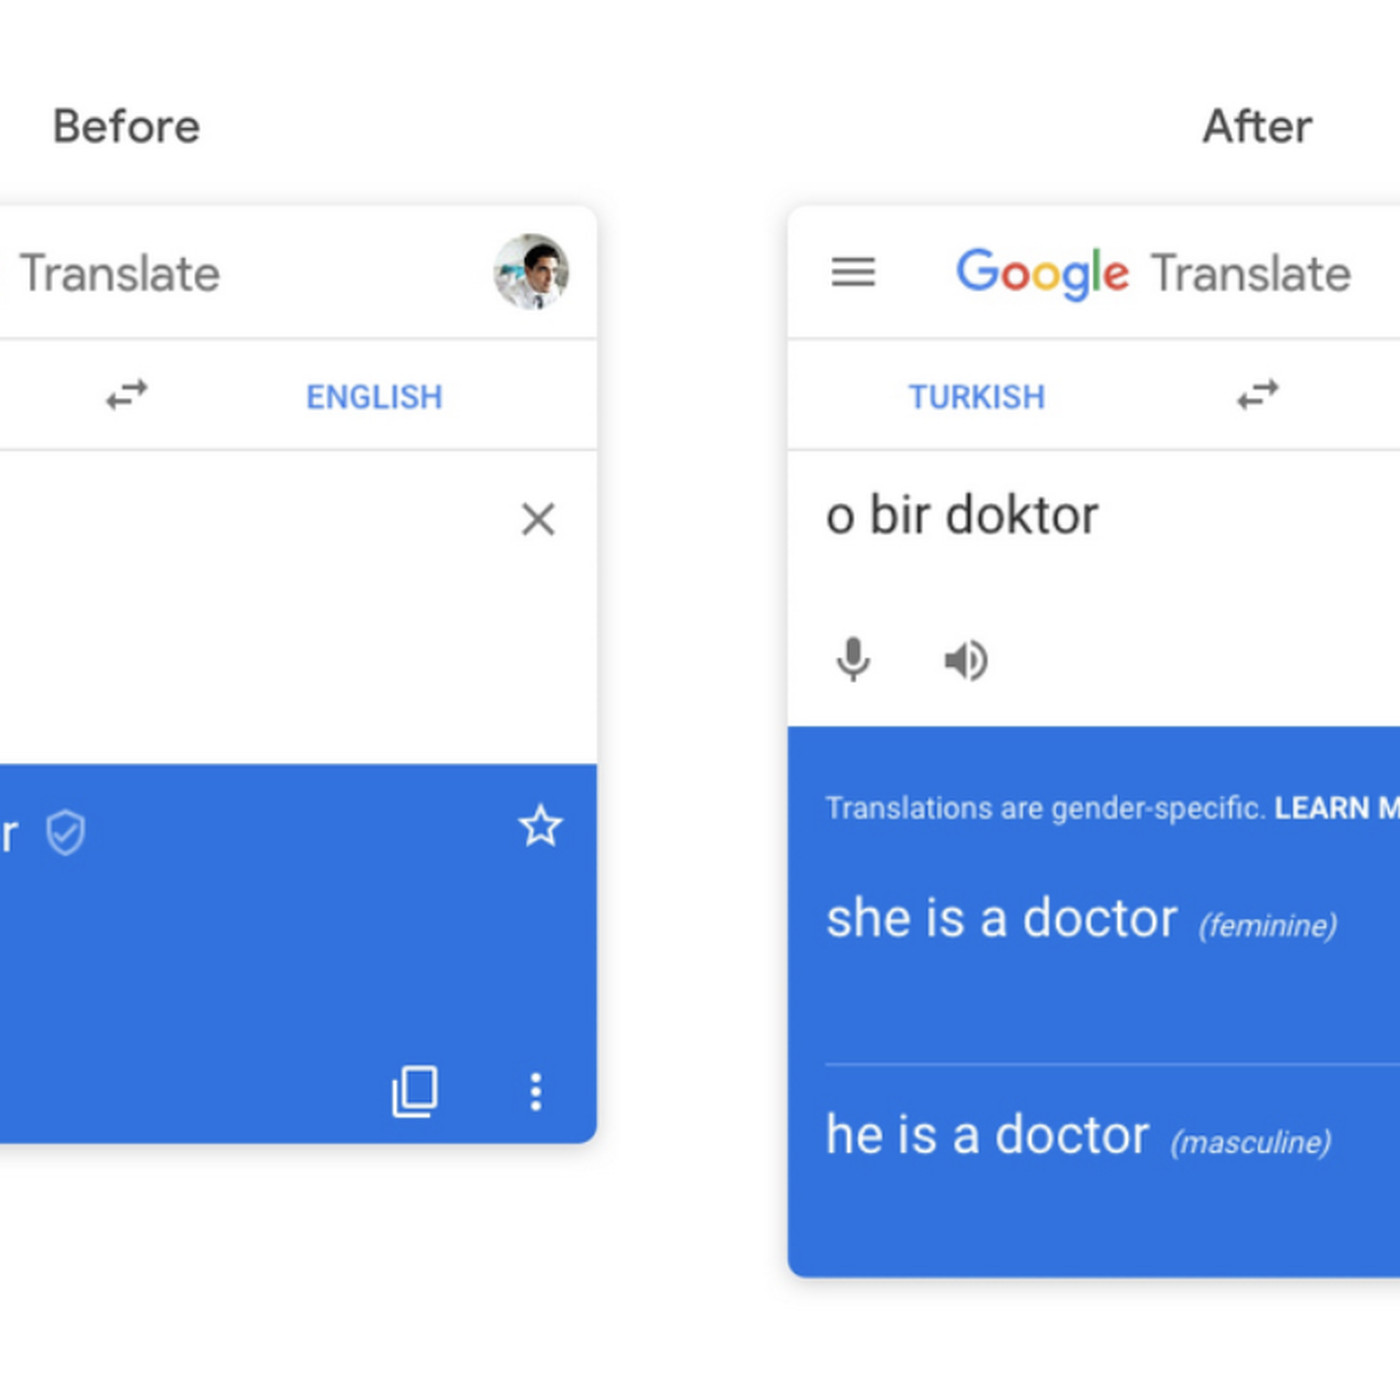 google translate now offers gender